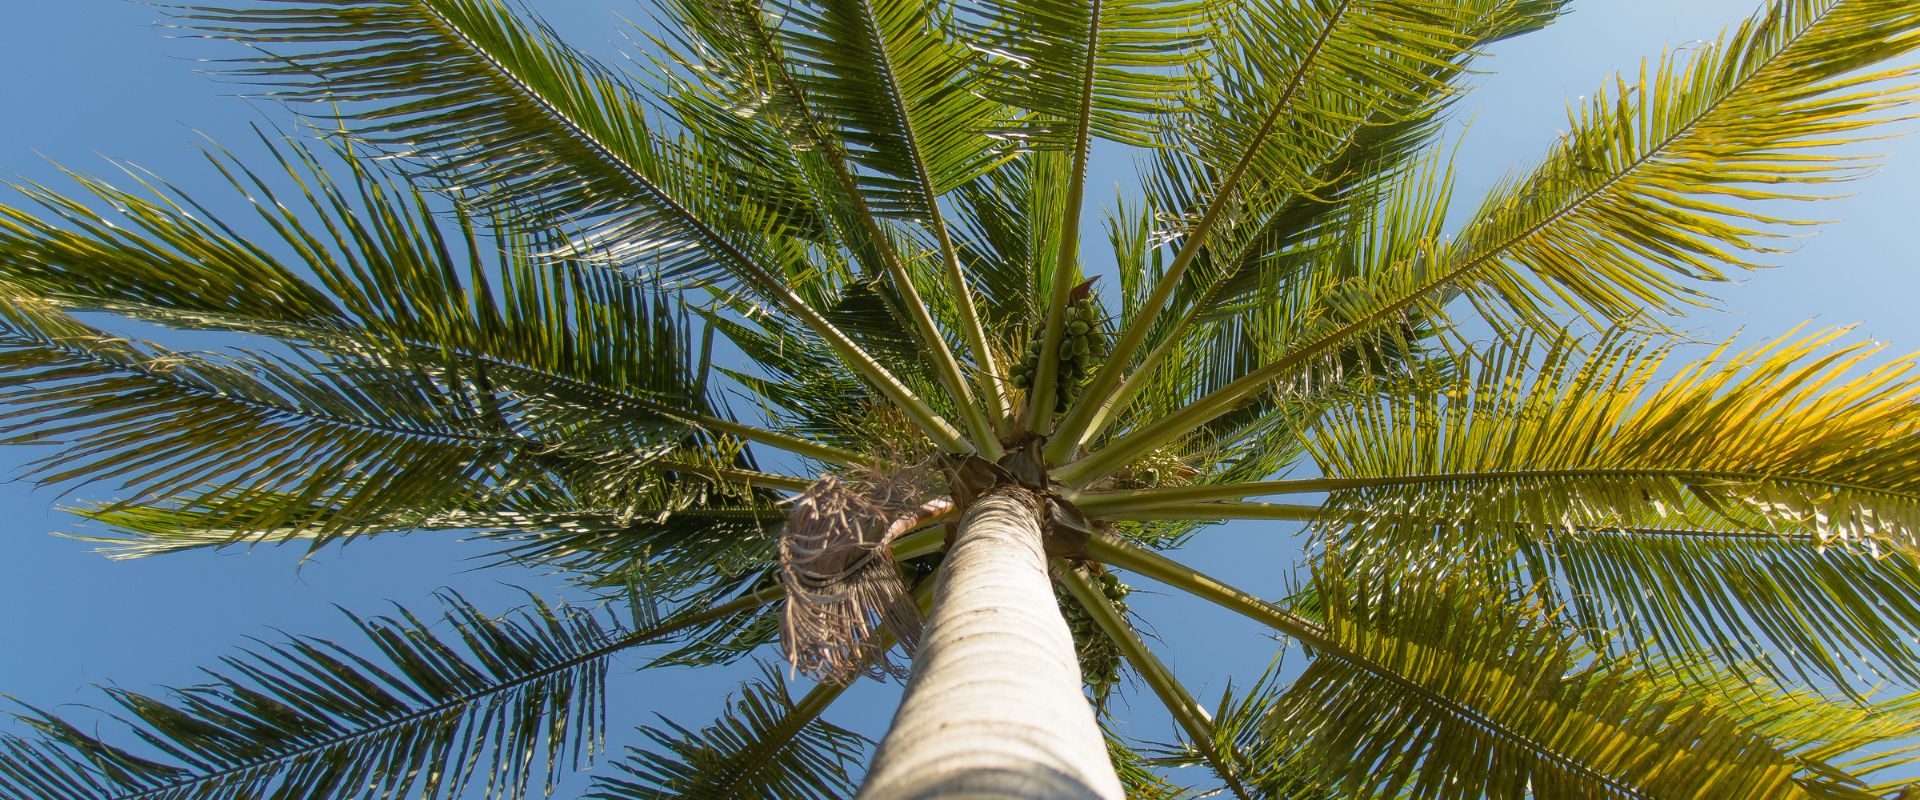 The Tree of Life | The Coconut Tree